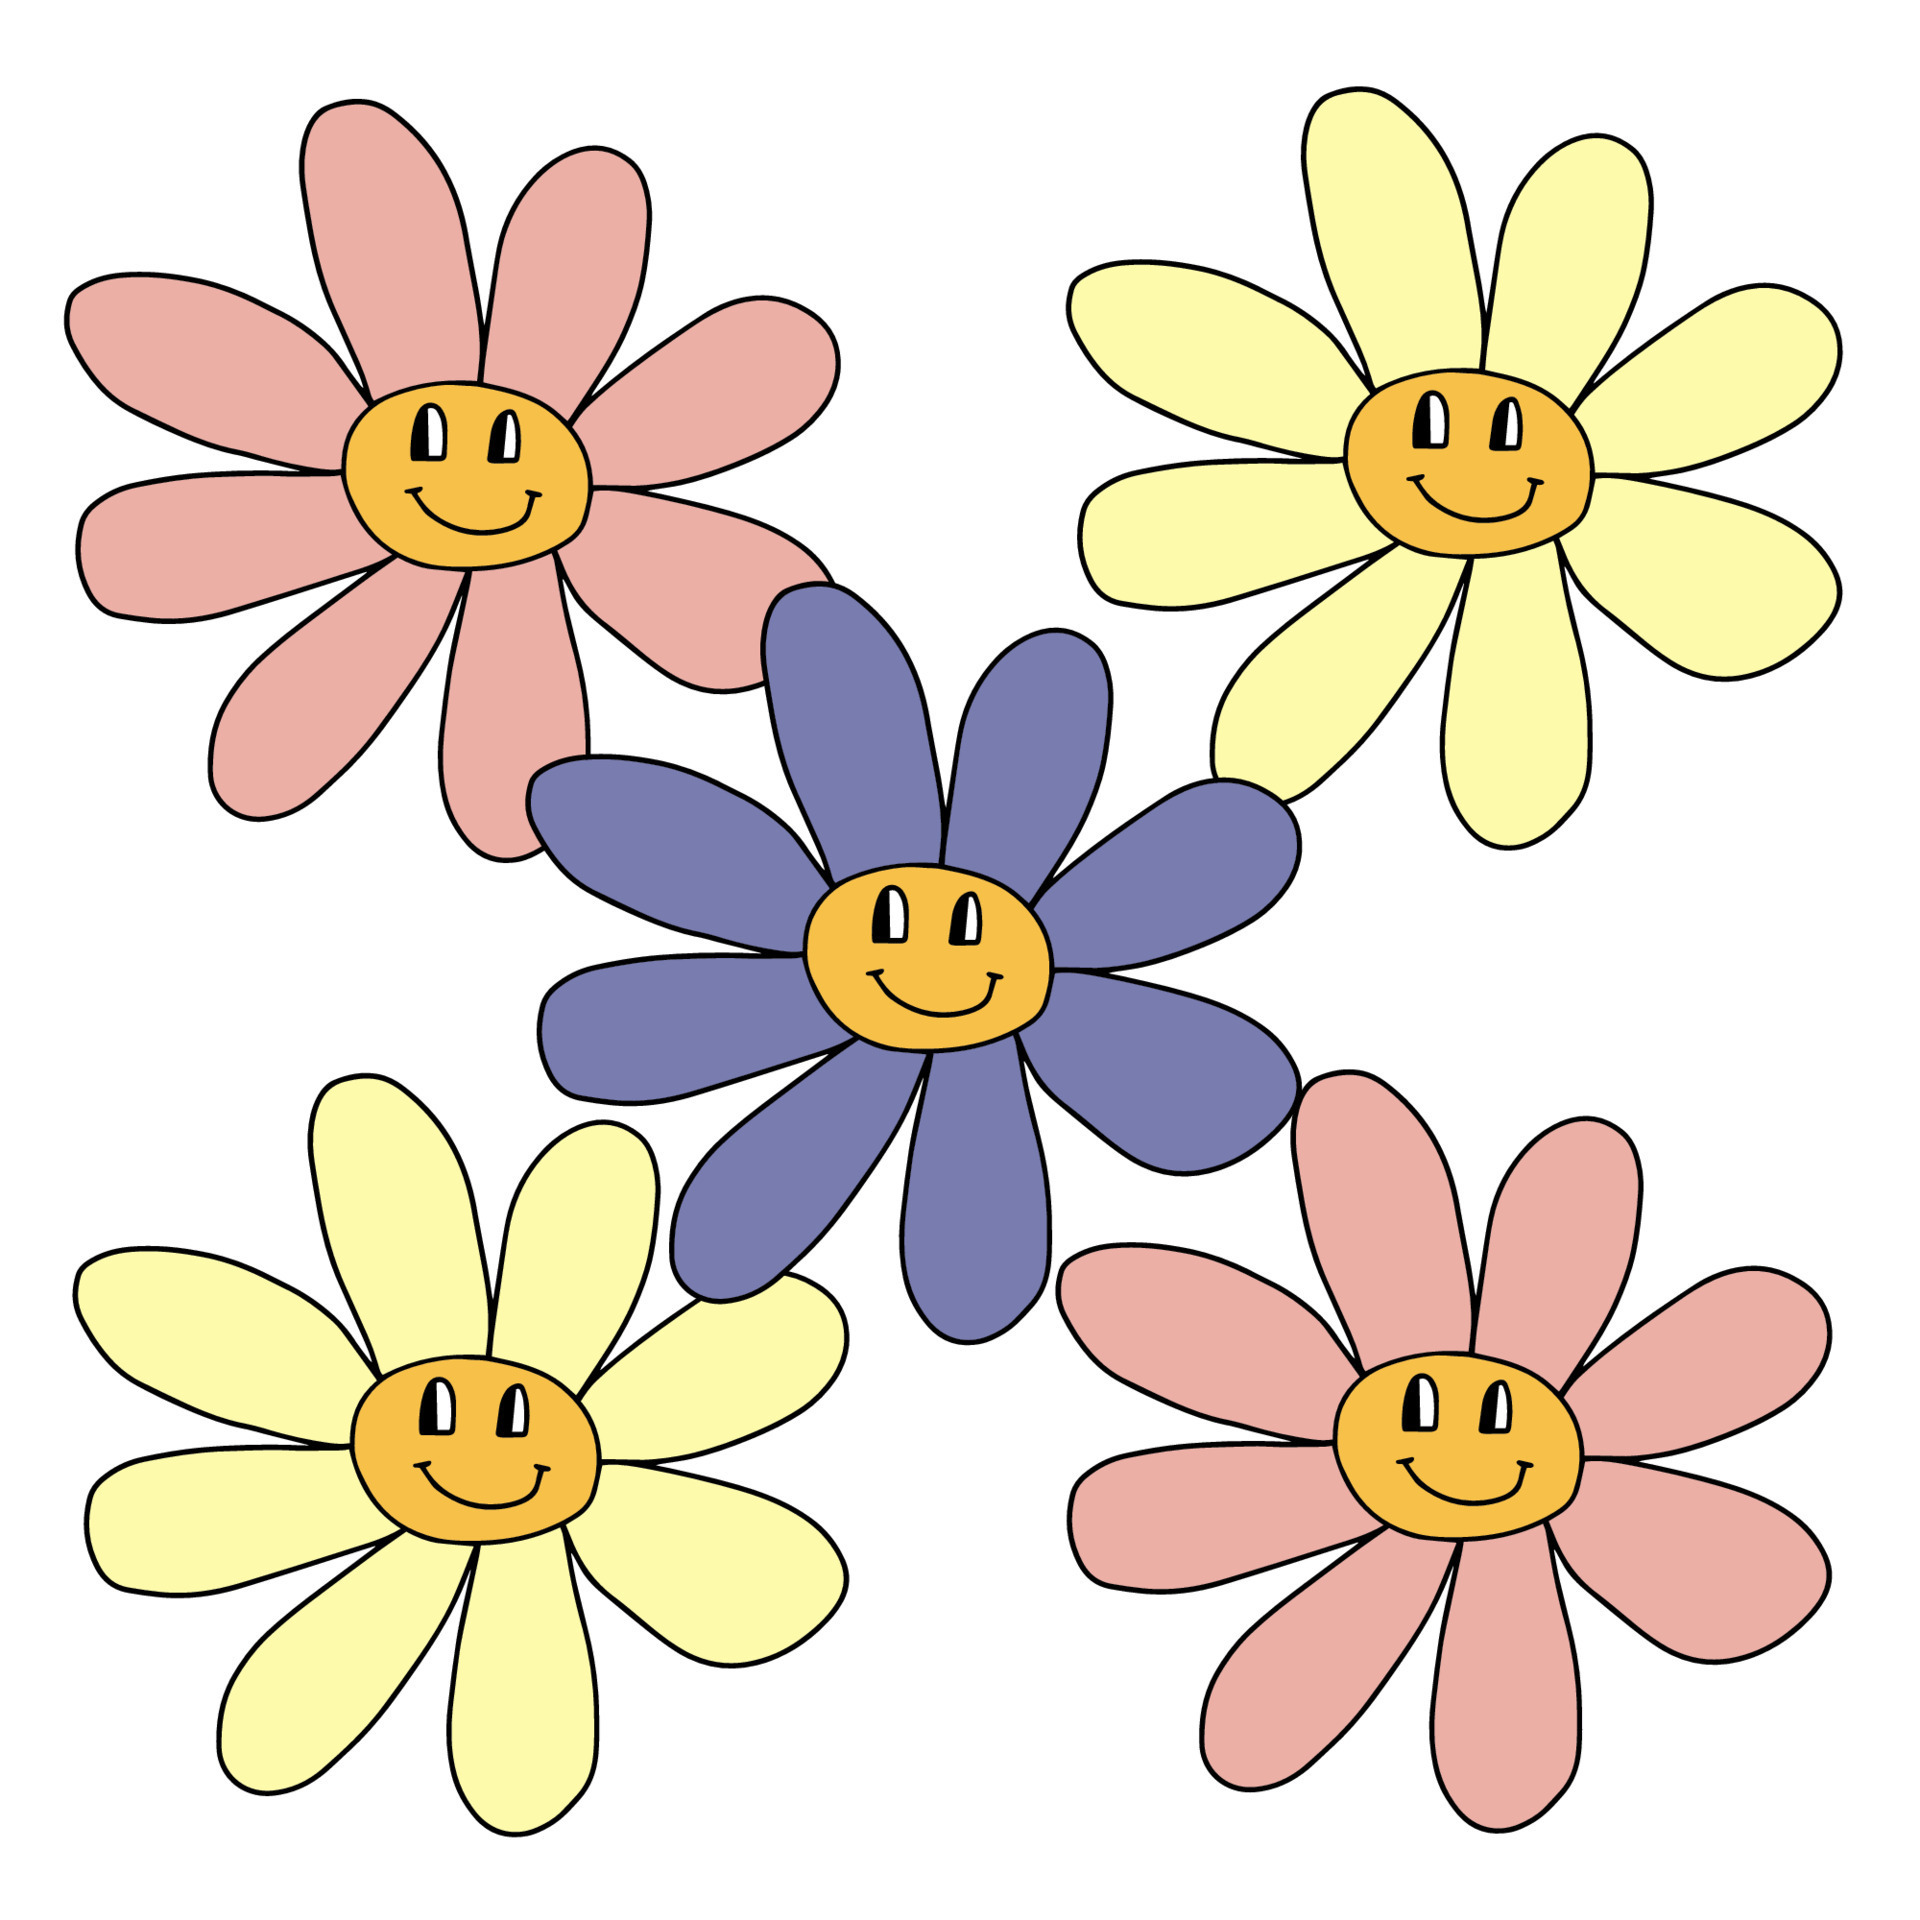 https://static.vecteezy.com/system/resources/previews/006/408/390/original/groovy-smiley-flower-hippie-positive-70s-retro-smiling-daisy-flower-print-vector.jpg